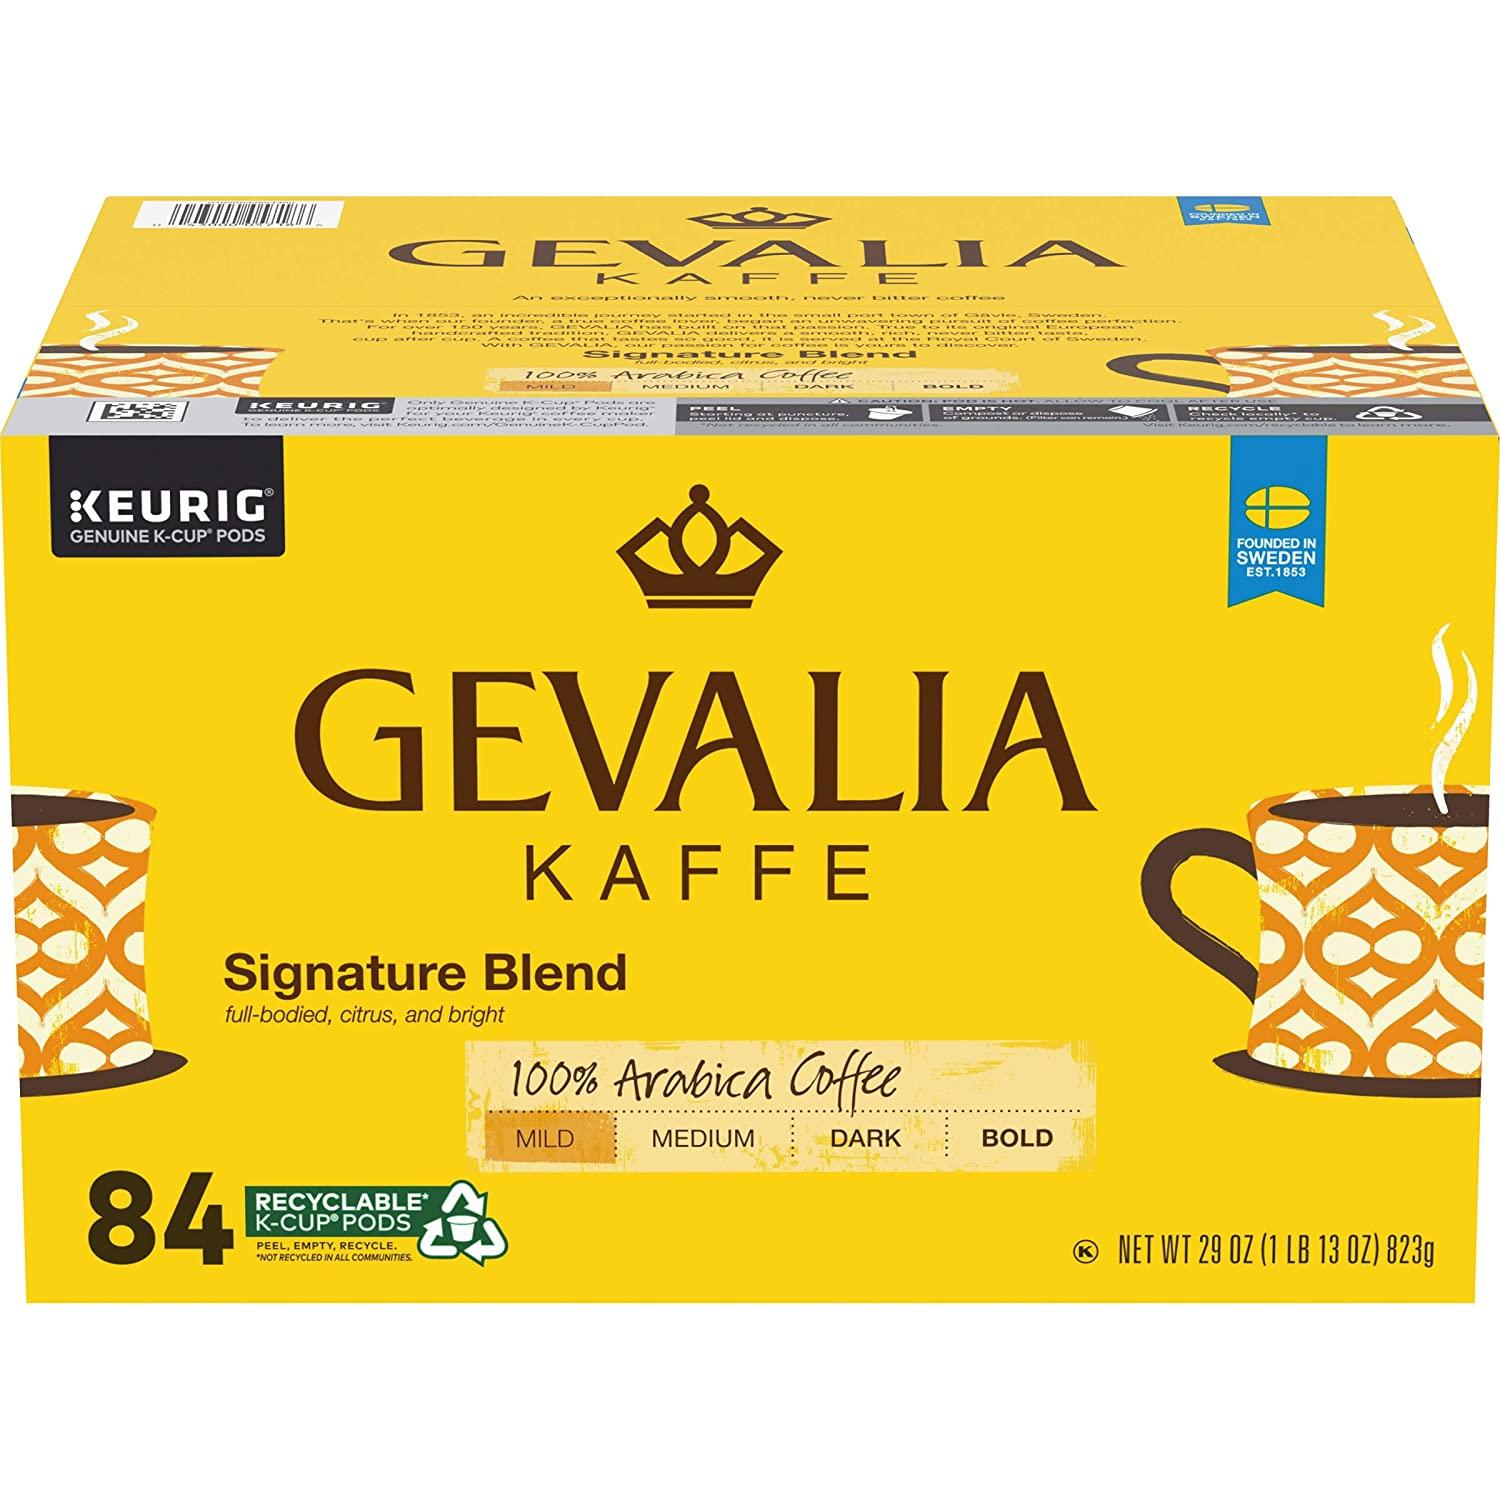 84 Gevalia Signature Blend Mild Roast K-Cups for $20.56 Shipped